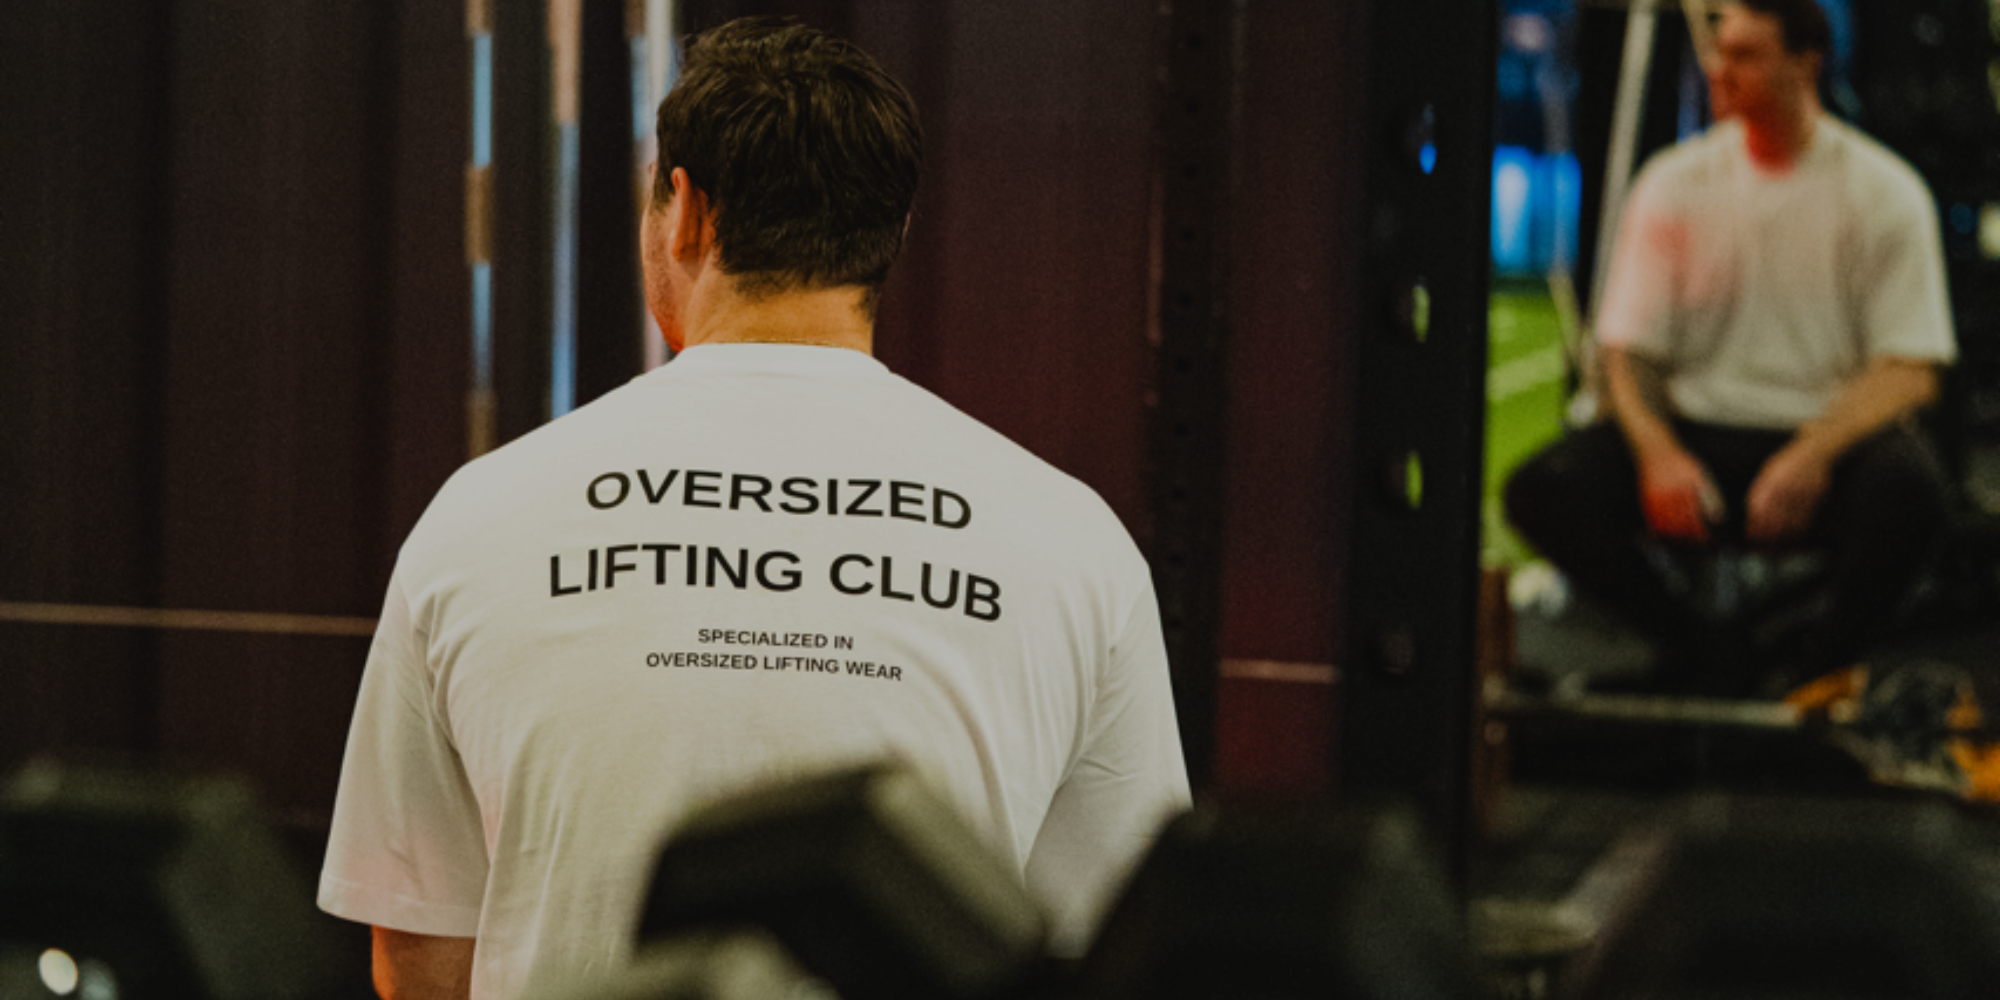 OVERSIZED LIFTING CLUB - Oversized Gym Wear